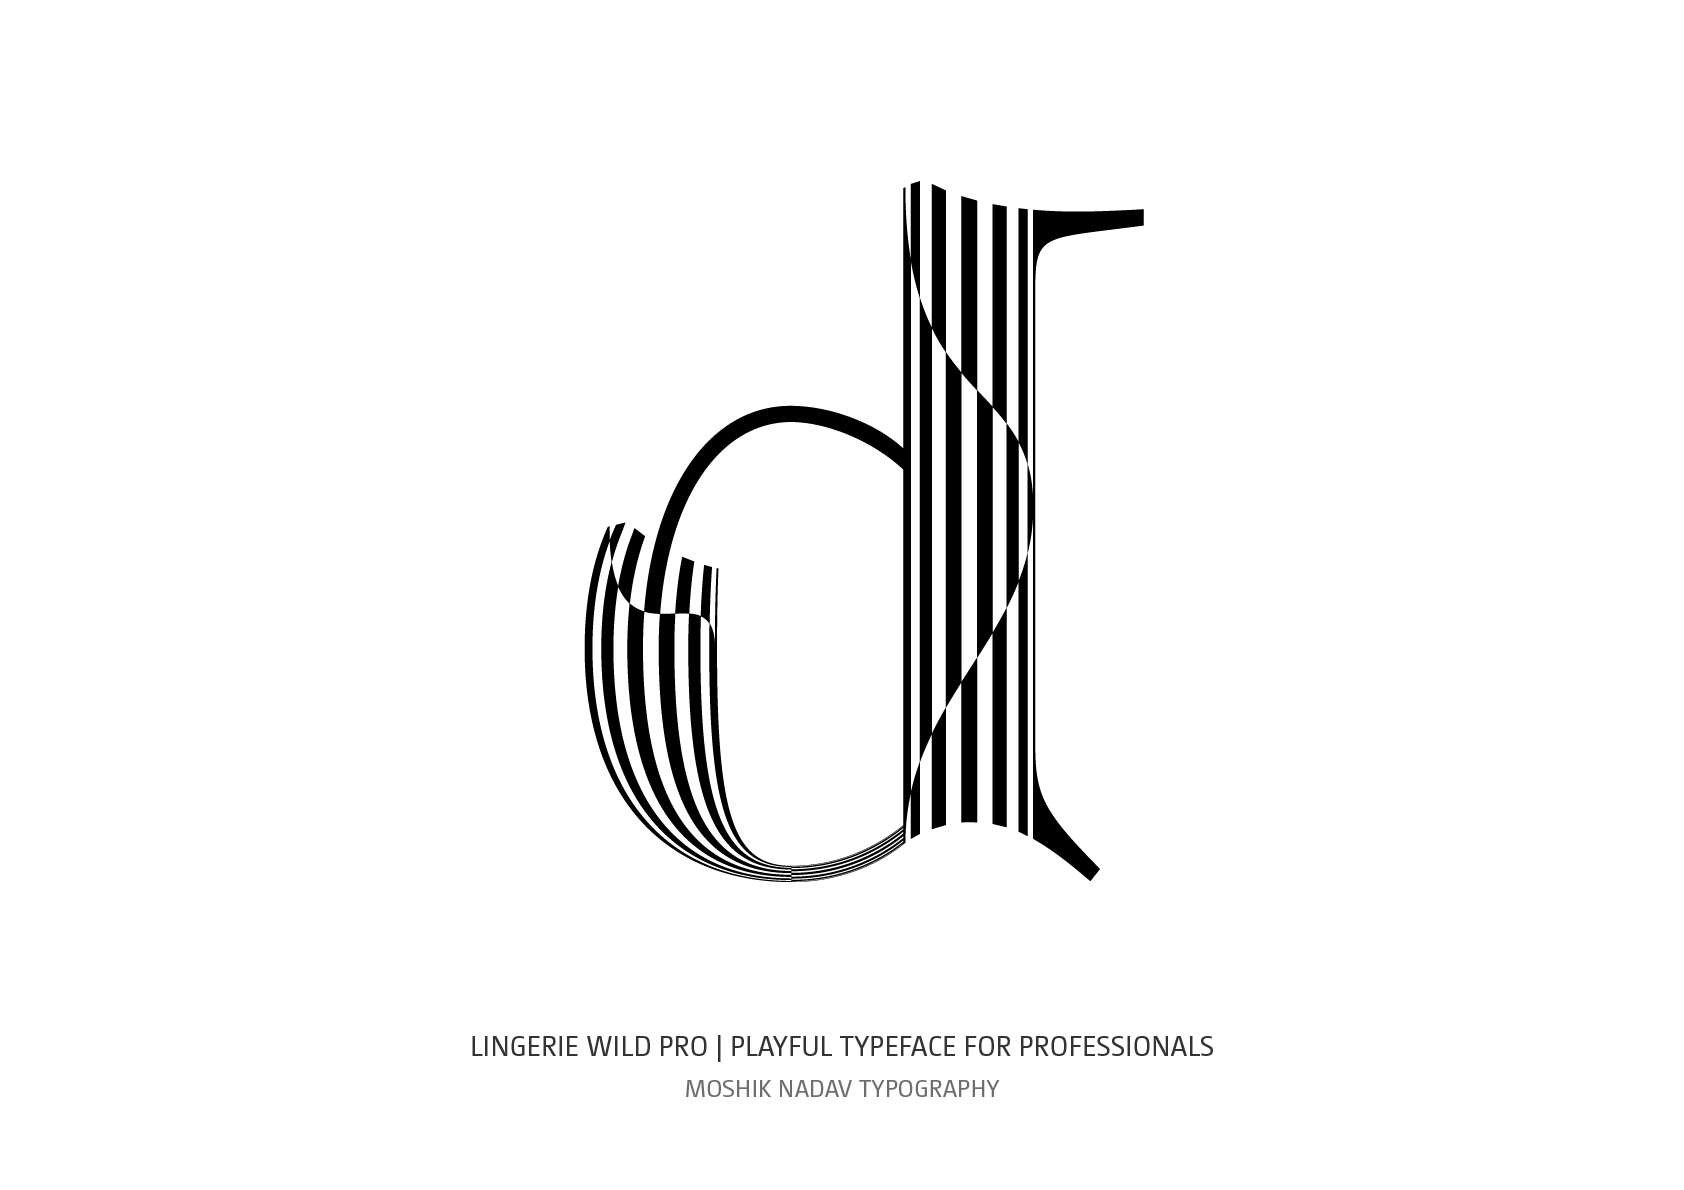 Amazing new font by Moshik Nadav Typography - Lingerie Wild Pro Typeface